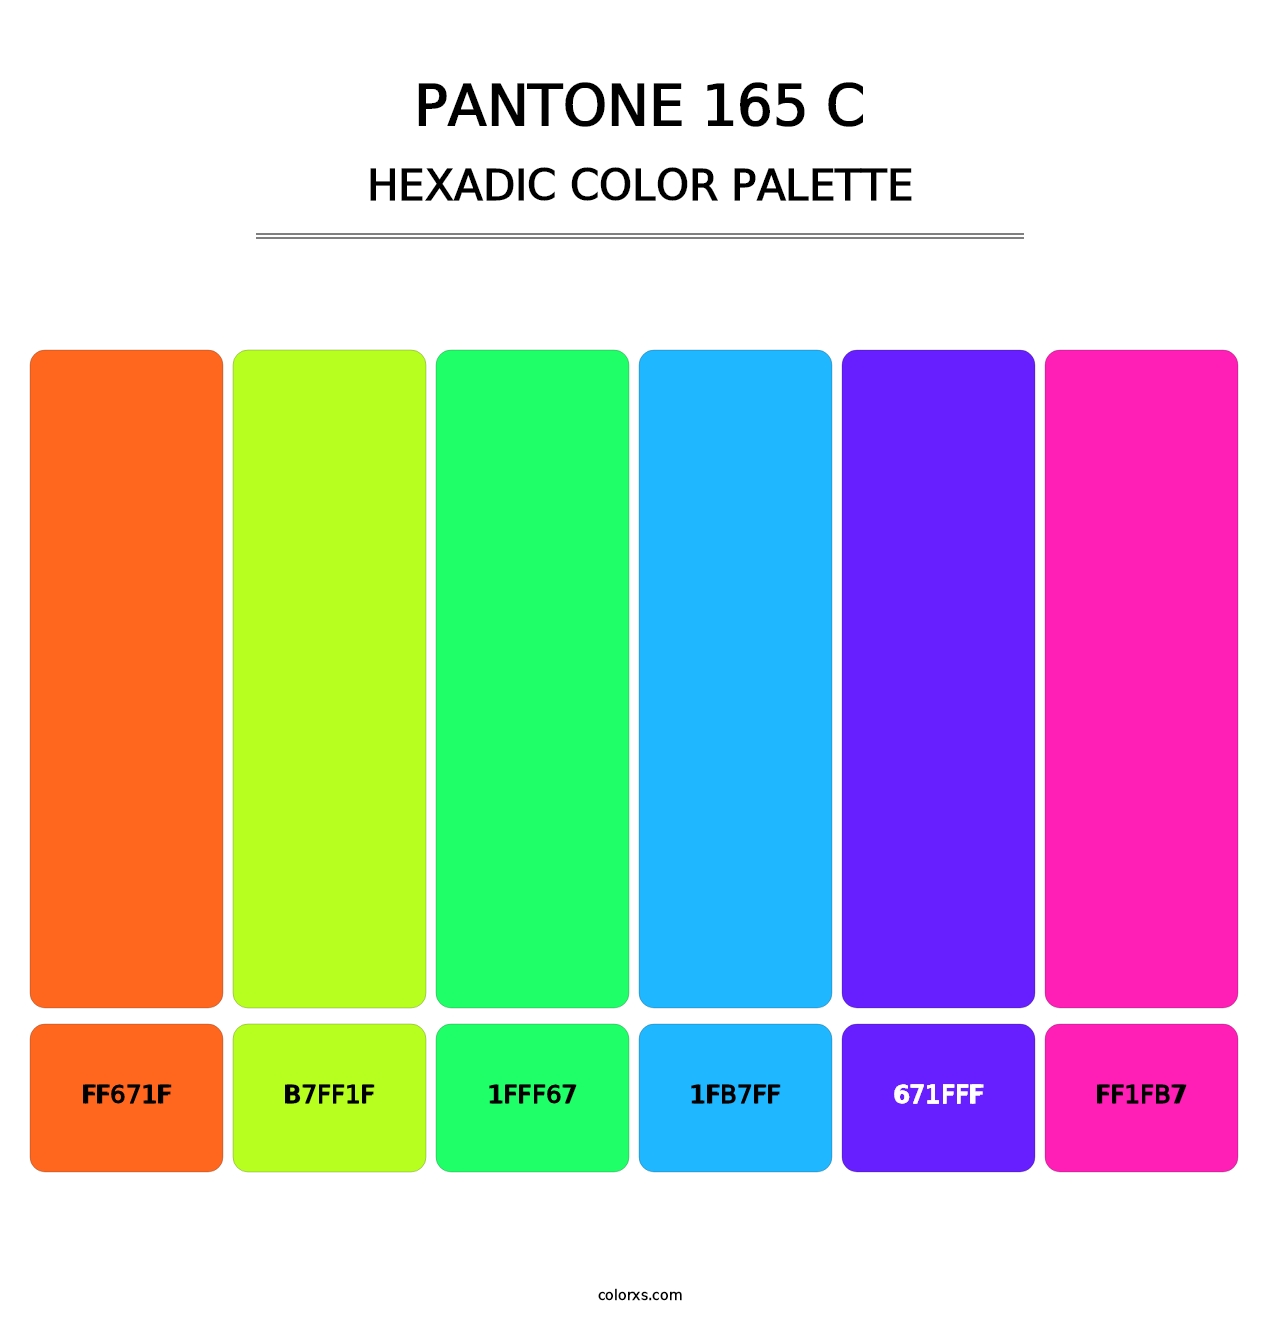 PANTONE 165 C - Hexadic Color Palette